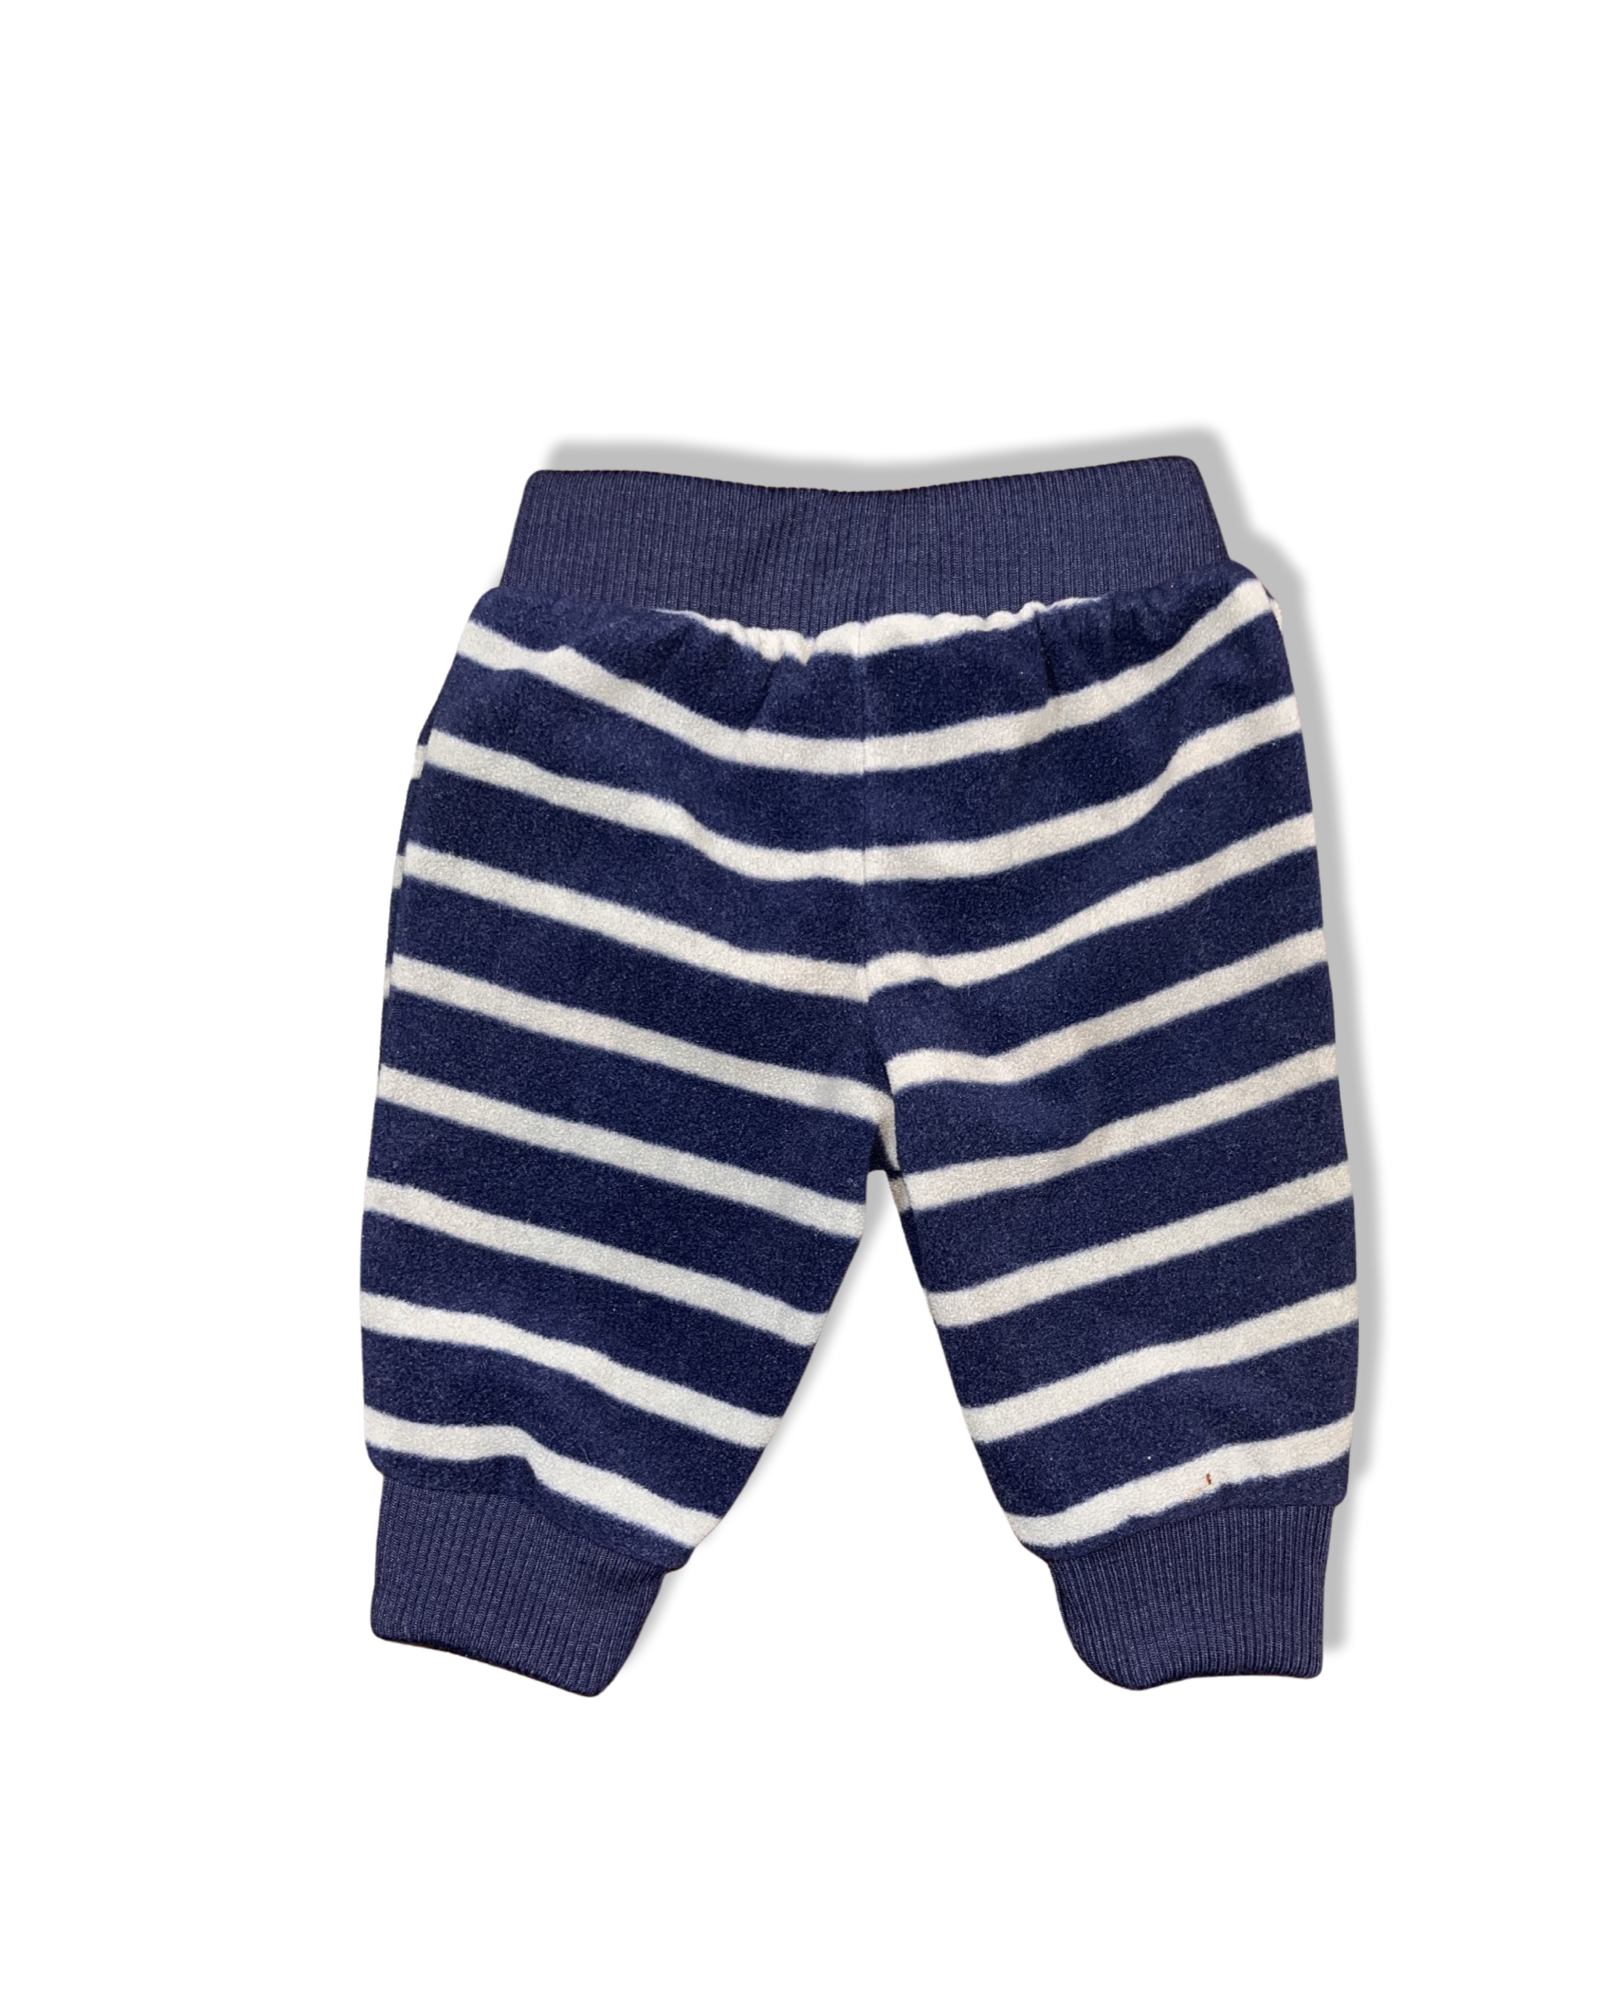 Carter's Fleece Blue and Grey Pants (0-3M)